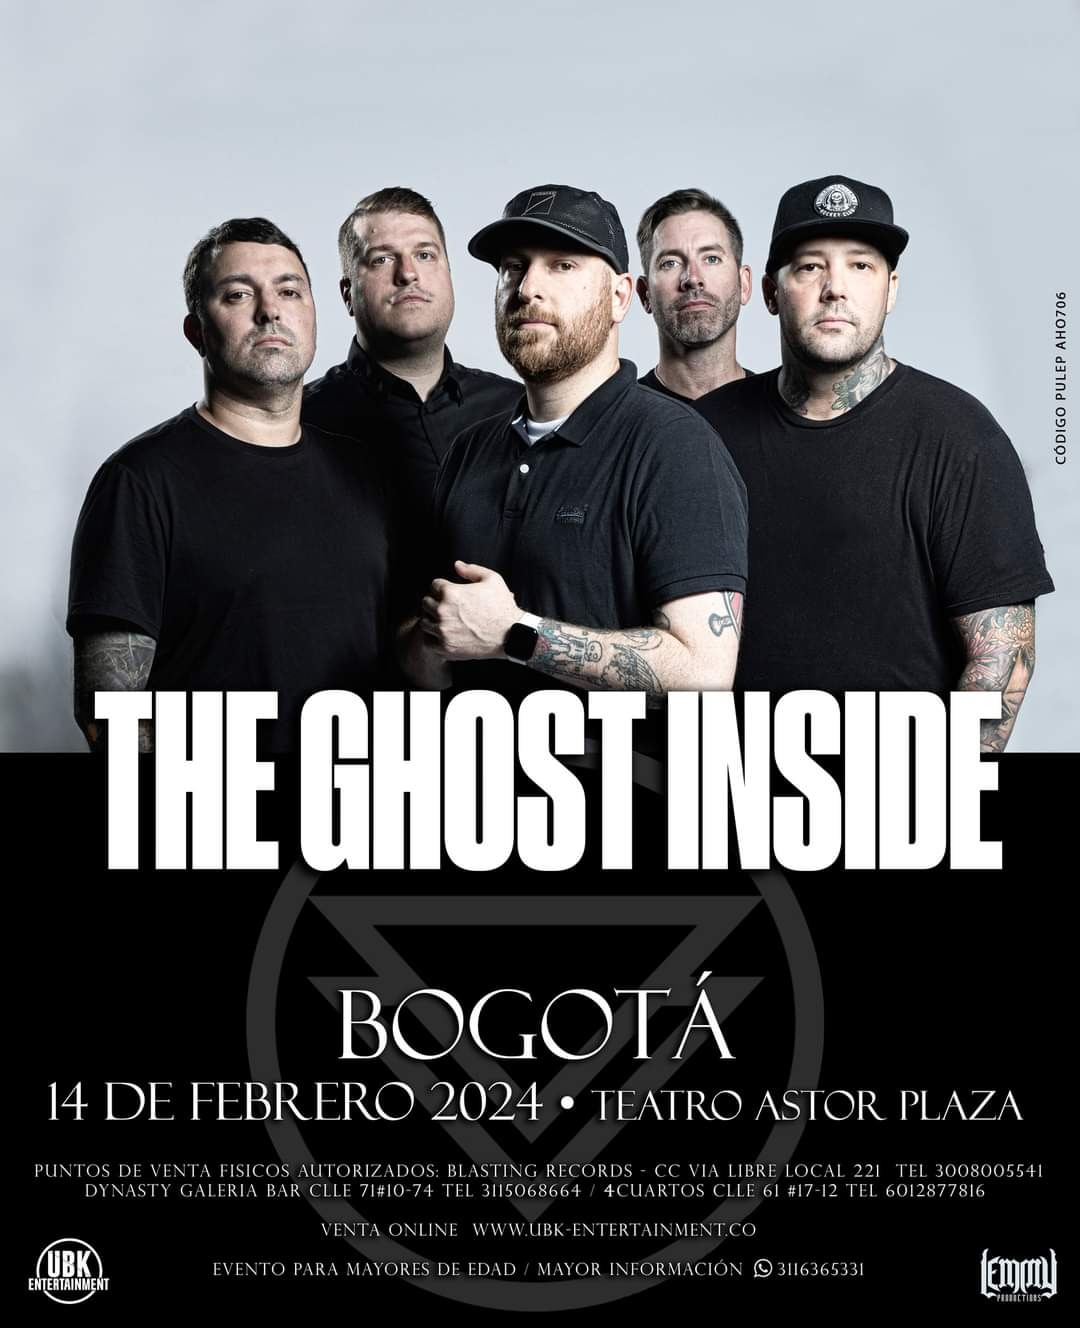 The ghost inside, Banda insignia del metalcore llega a Bogotá